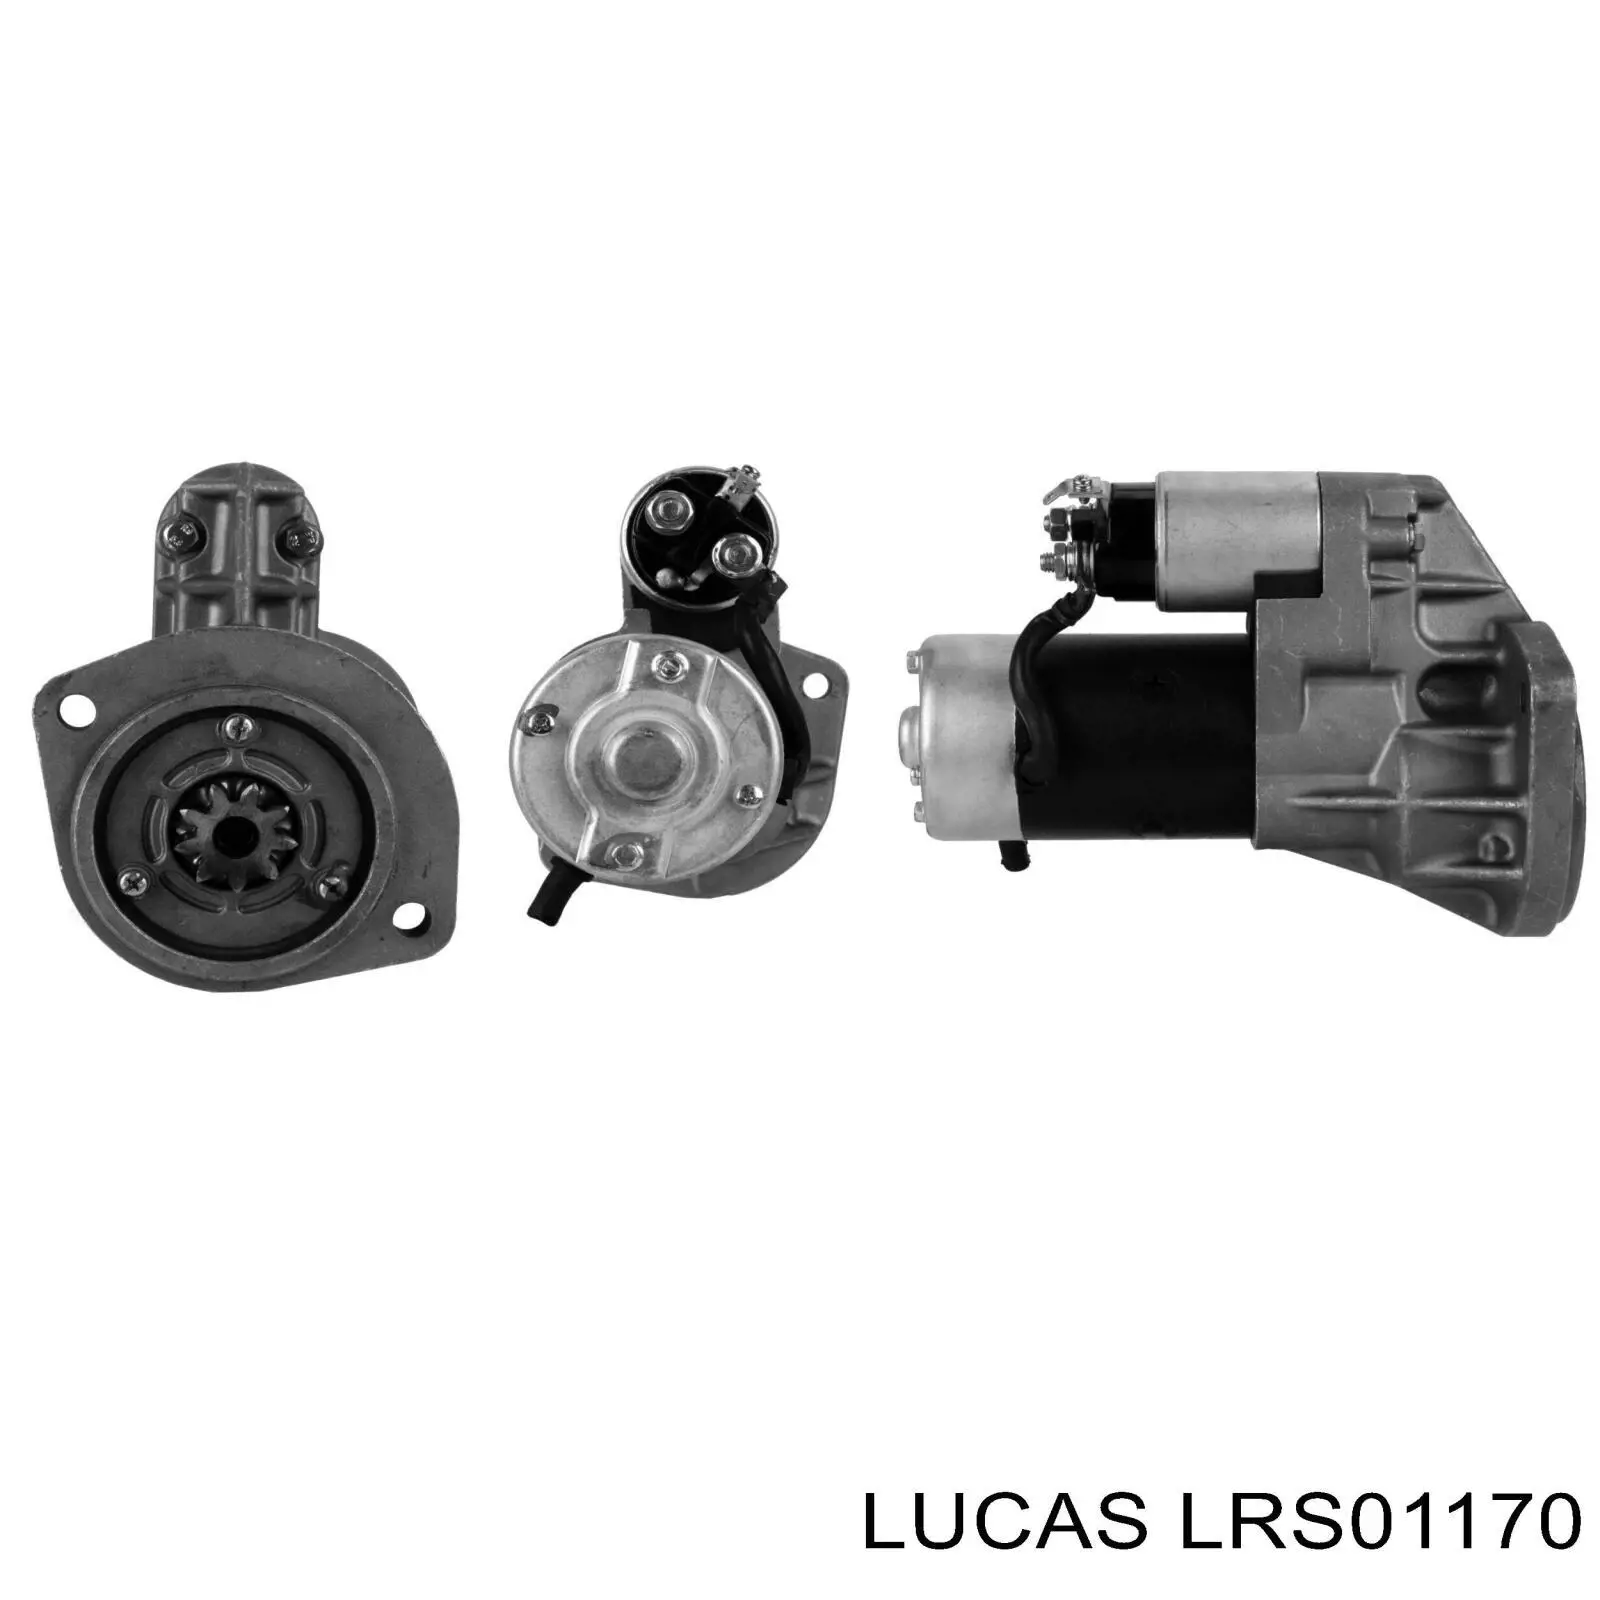 Motor de arranque LRS01170 Lucas